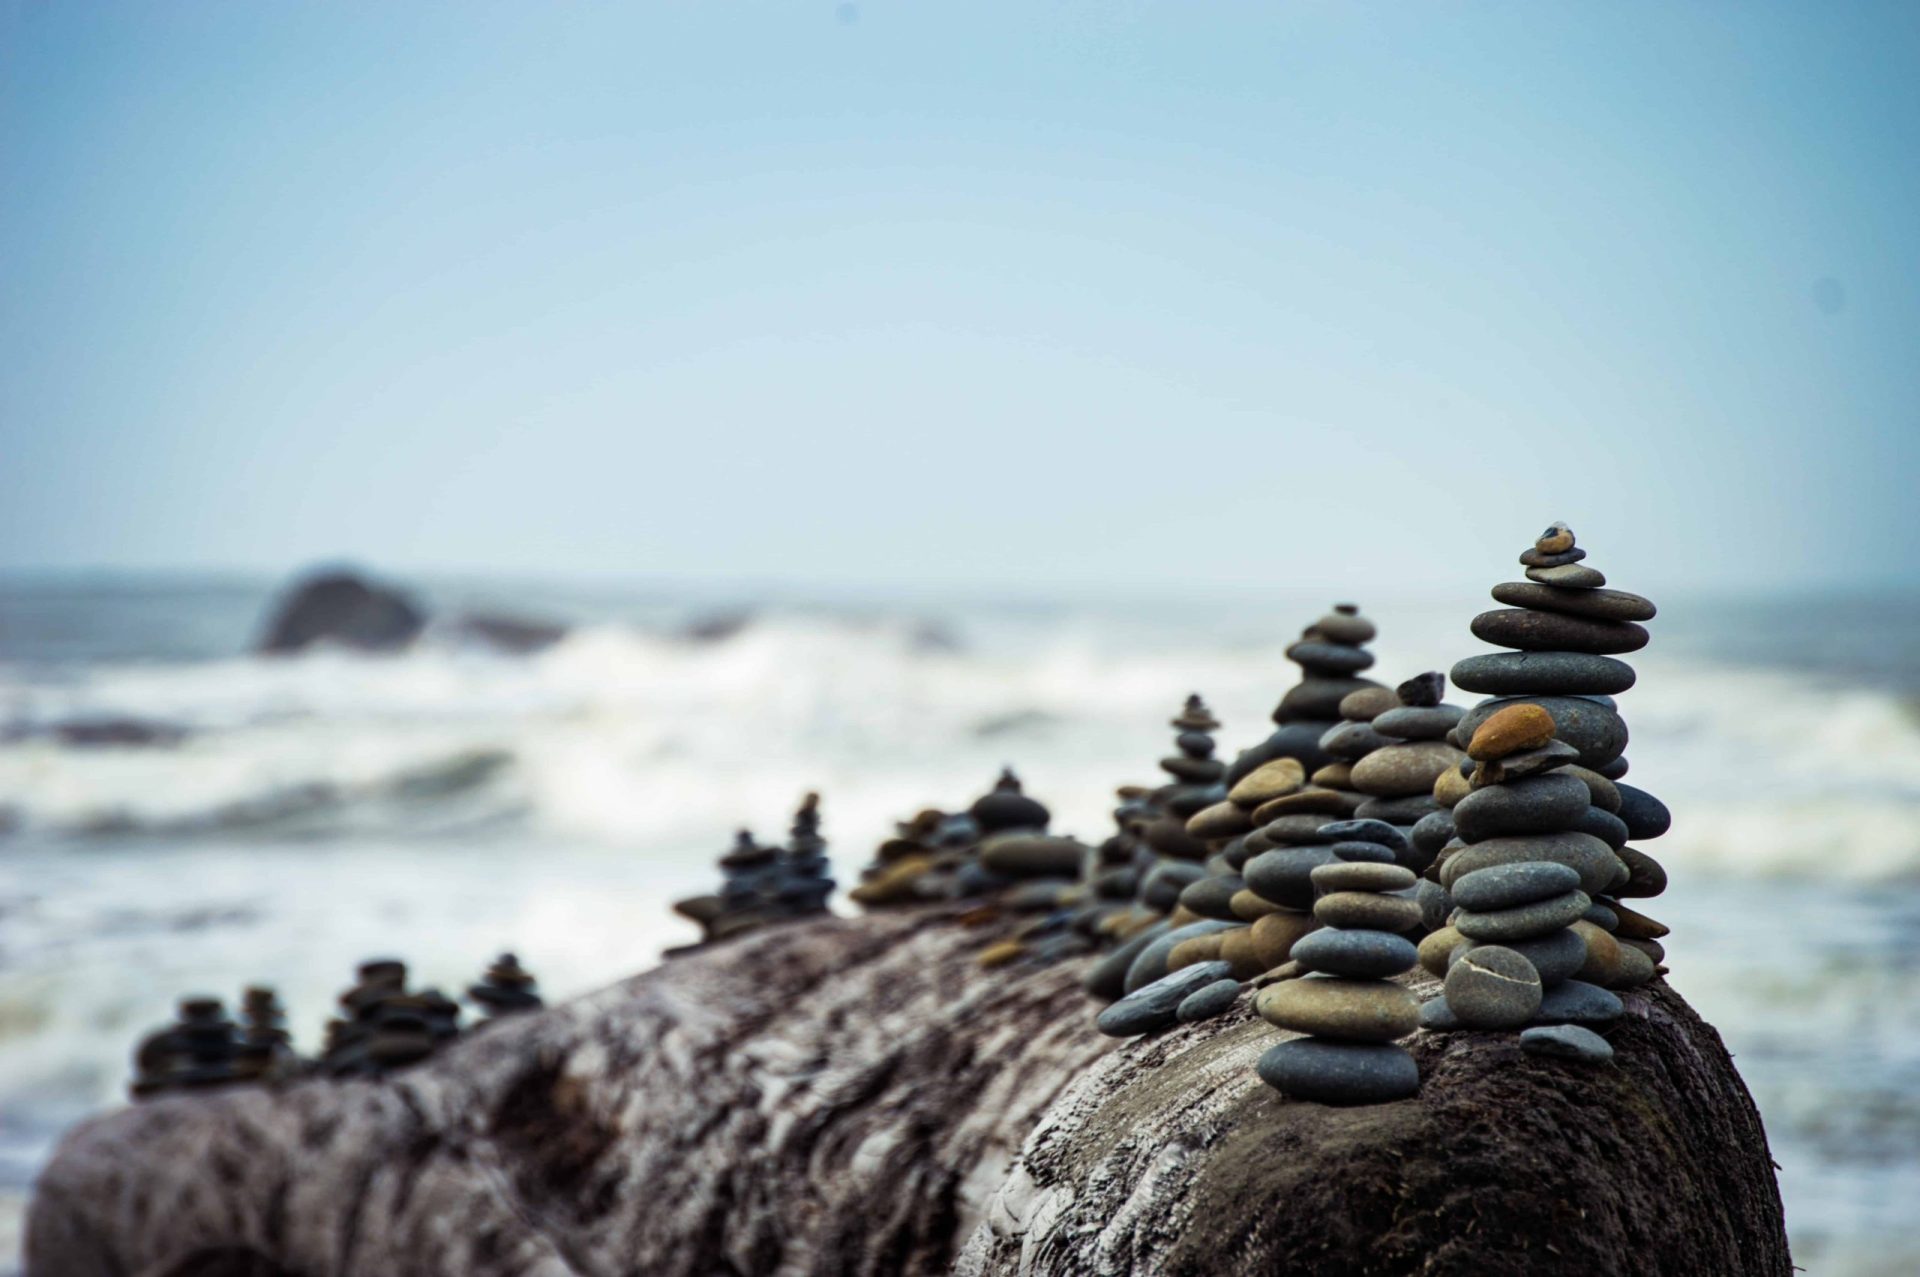 balancing multiple stacks of stones in seaside